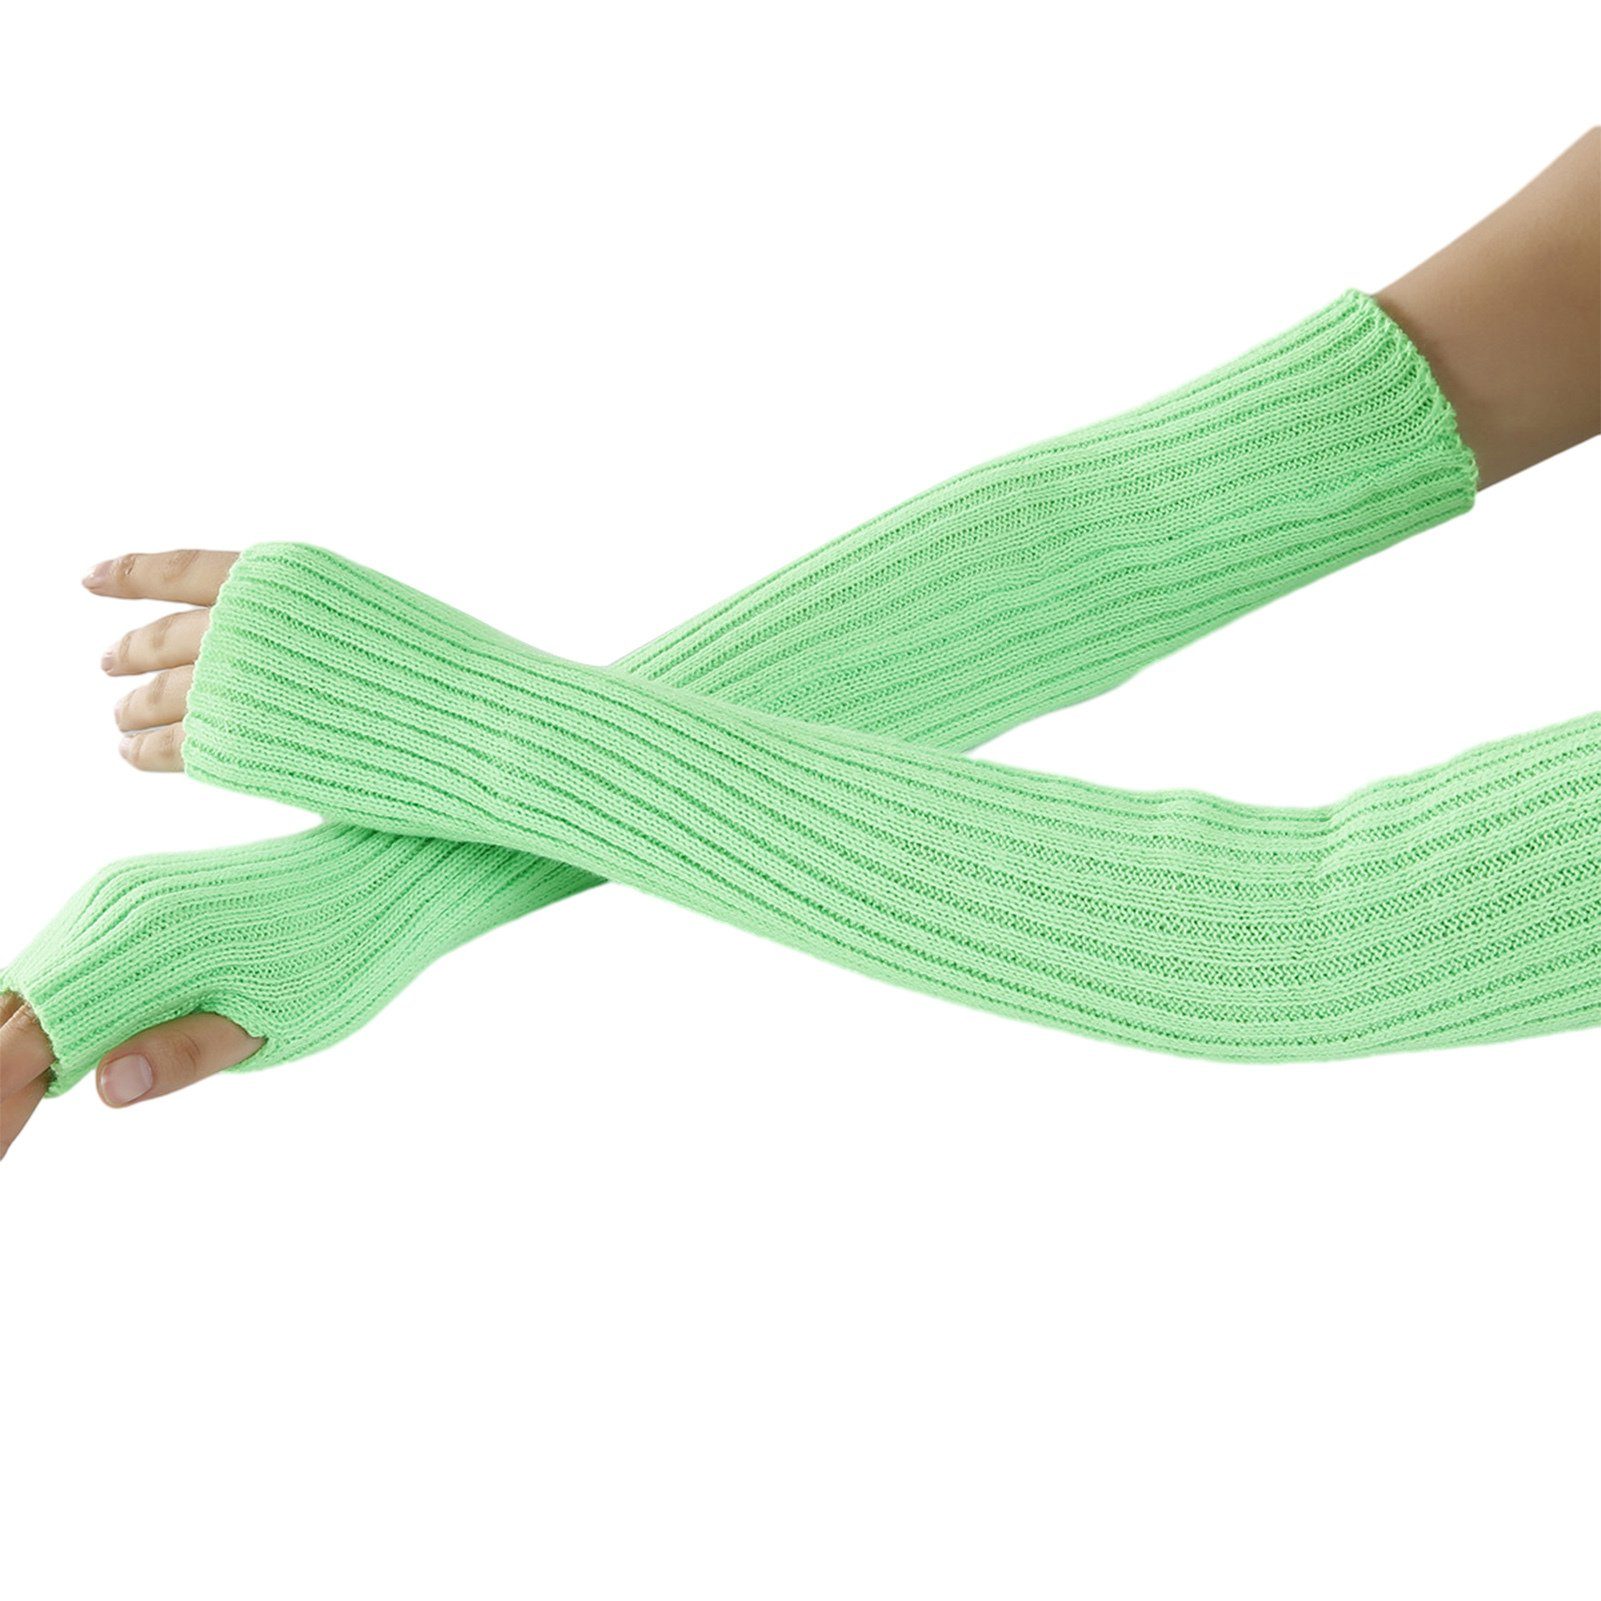 Blusmart Strickhandschuhe Winterhandschuhe Zum Warmhalten, Lange Fingerlose Handschuhe, Bequeme Strickhandschuhe Grün